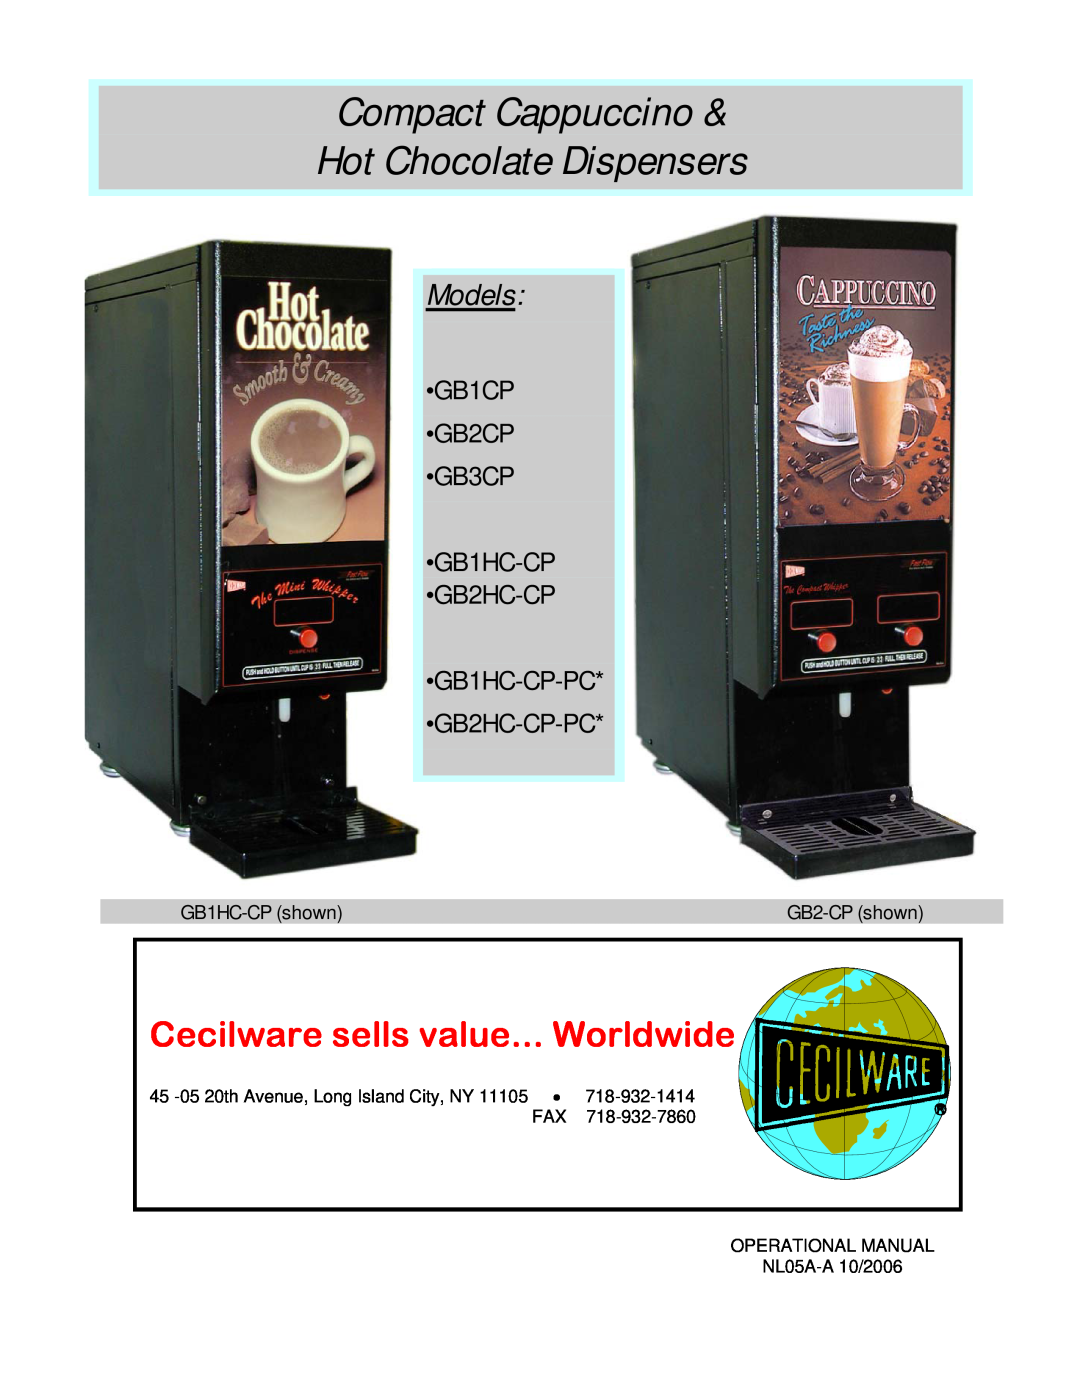 Cecilware GB1HC-CP-PC*, GB3CP manual GB1HC-CP shown, GB2-CP shown, Compact Cappuccino Hot Chocolate Dispensers, Models 